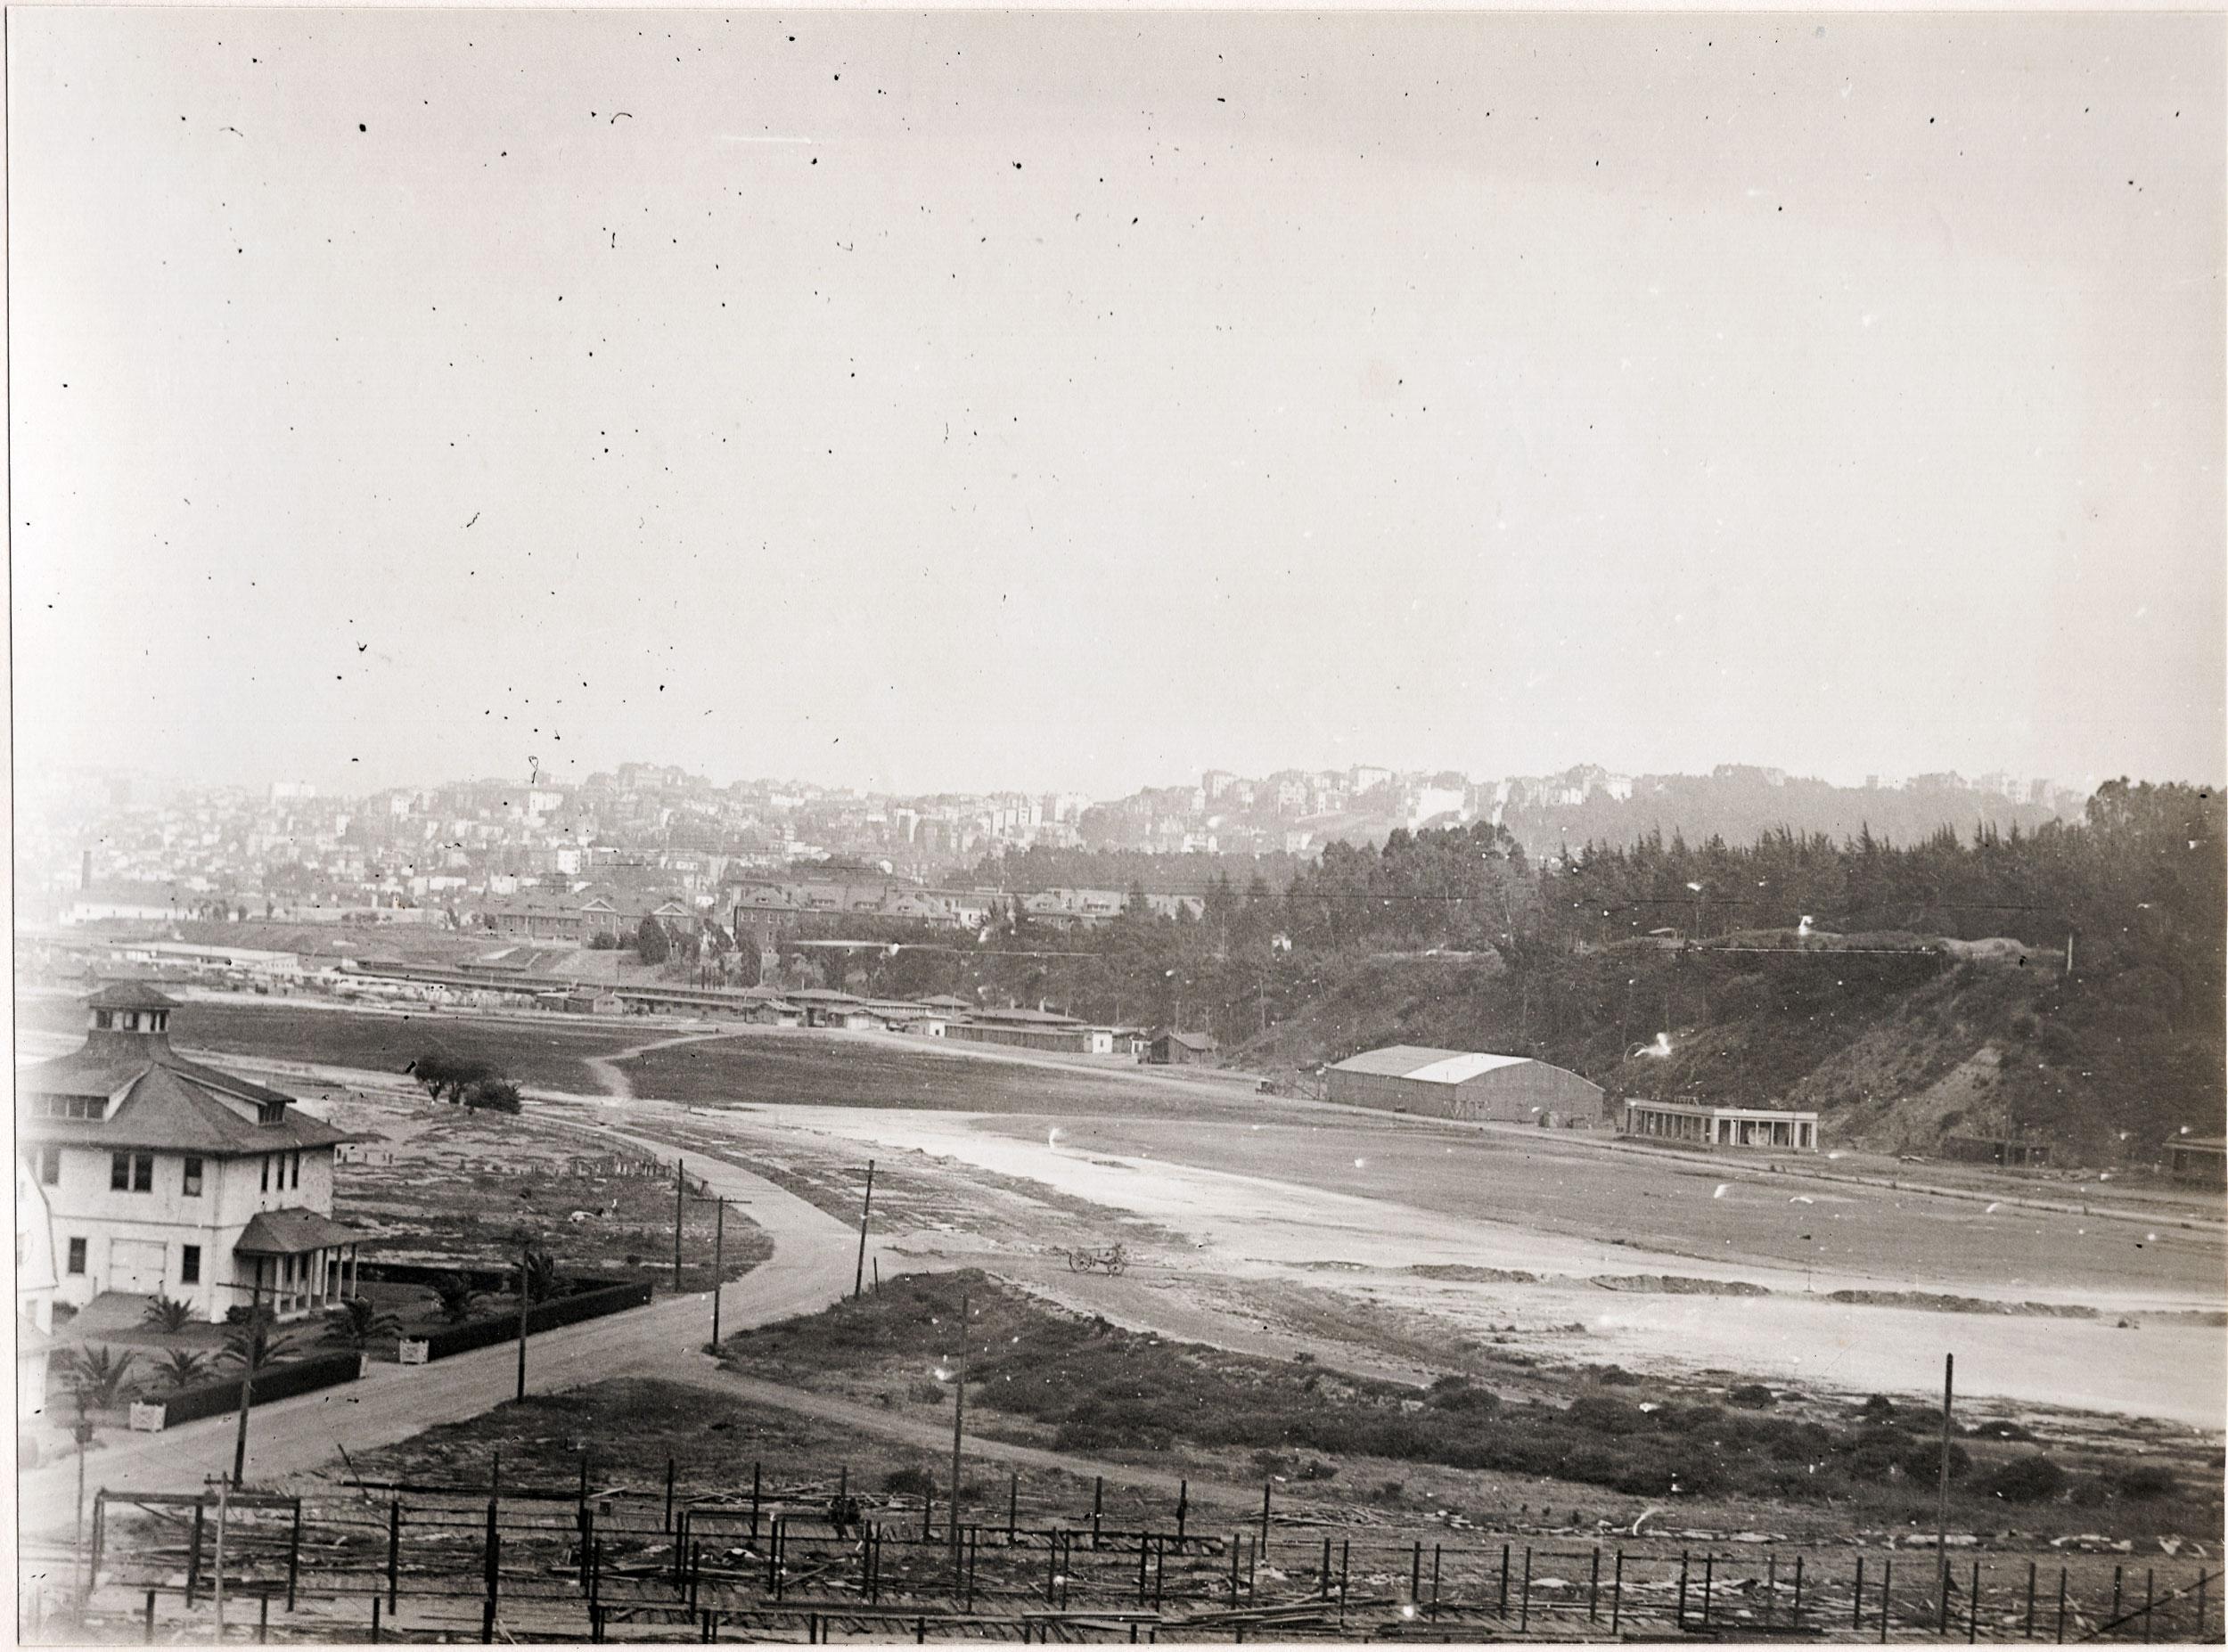 Crissy Field construction in 1921